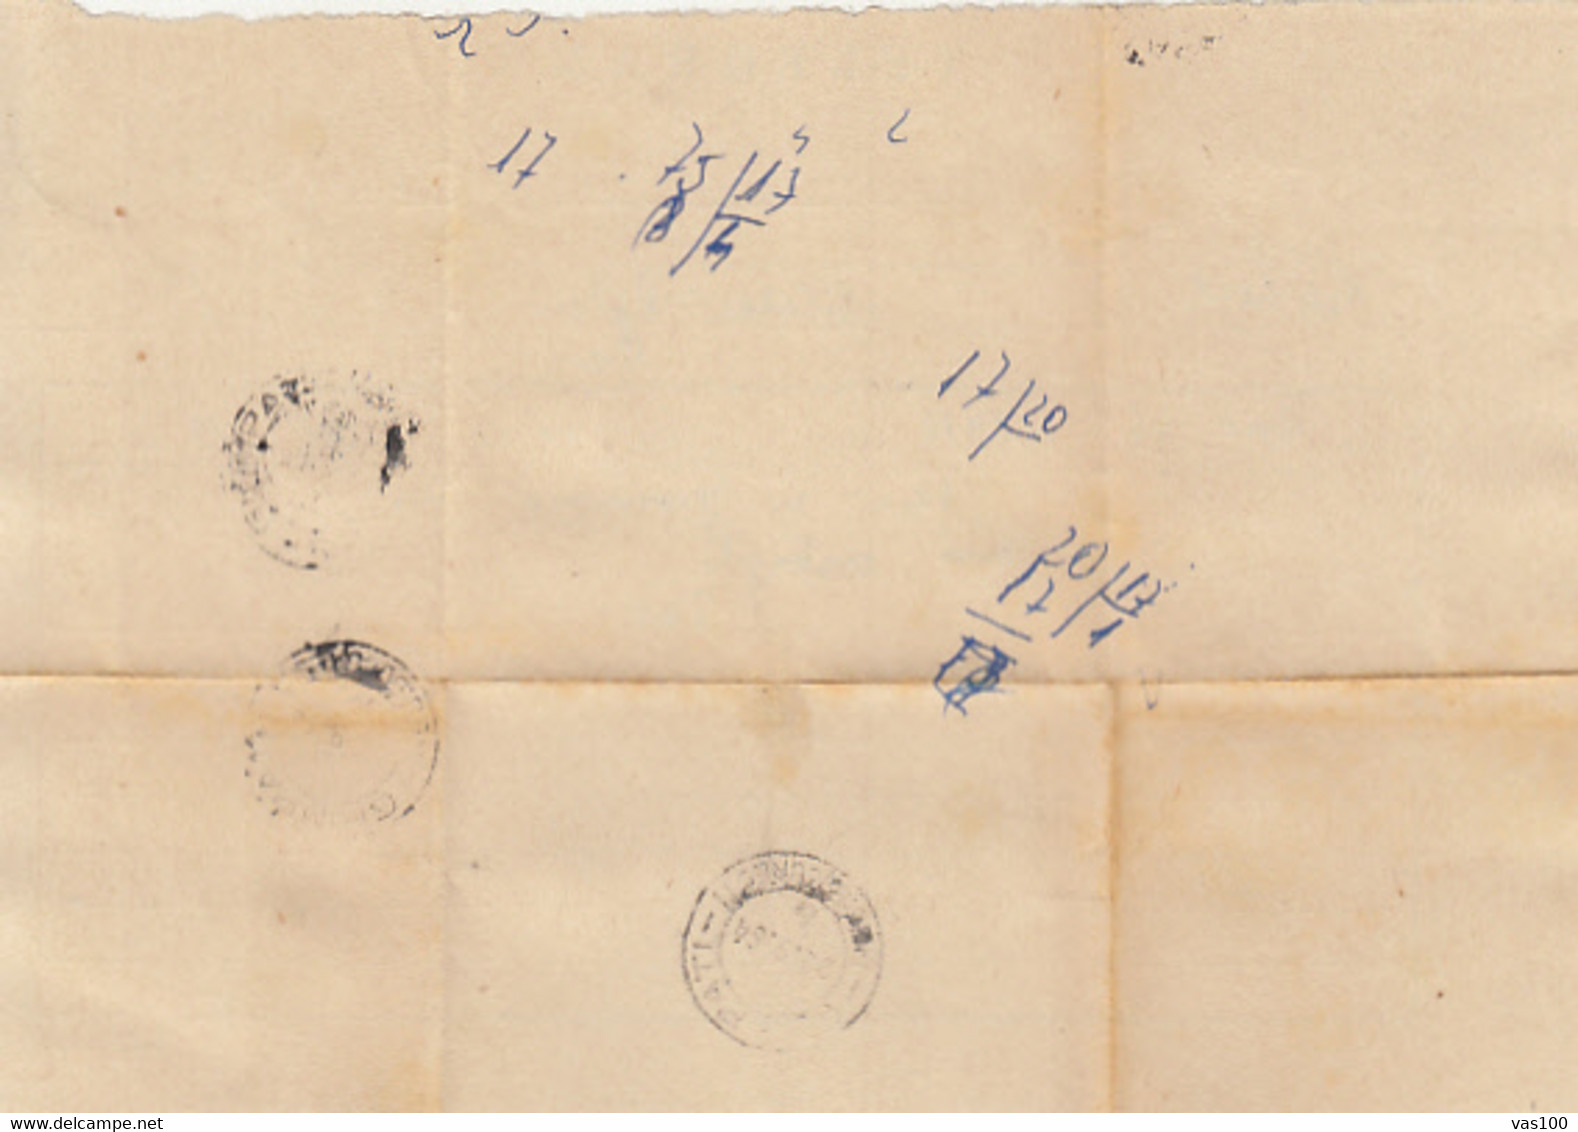 TELEGRAPH, TELEGRAMME SENT FROM BUCHAREST TO CLUJ, 1964, ROMANIA - Telegraphenmarken